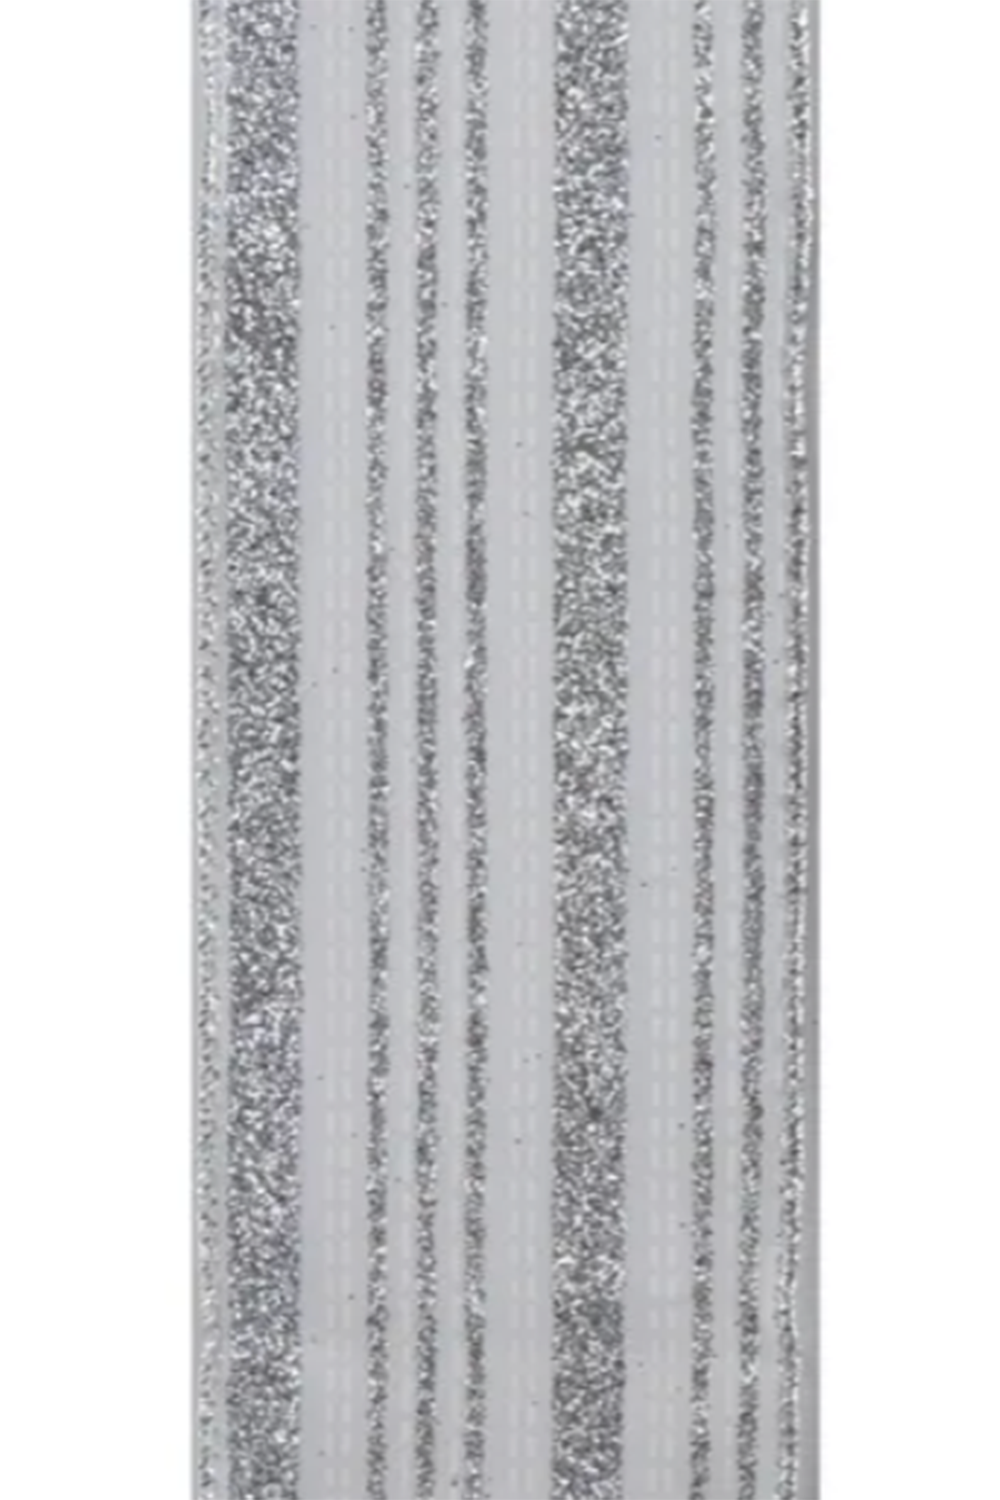 SIDEWALK SALE ITEM - Decorating Ribbon - Woven Silver Stripe